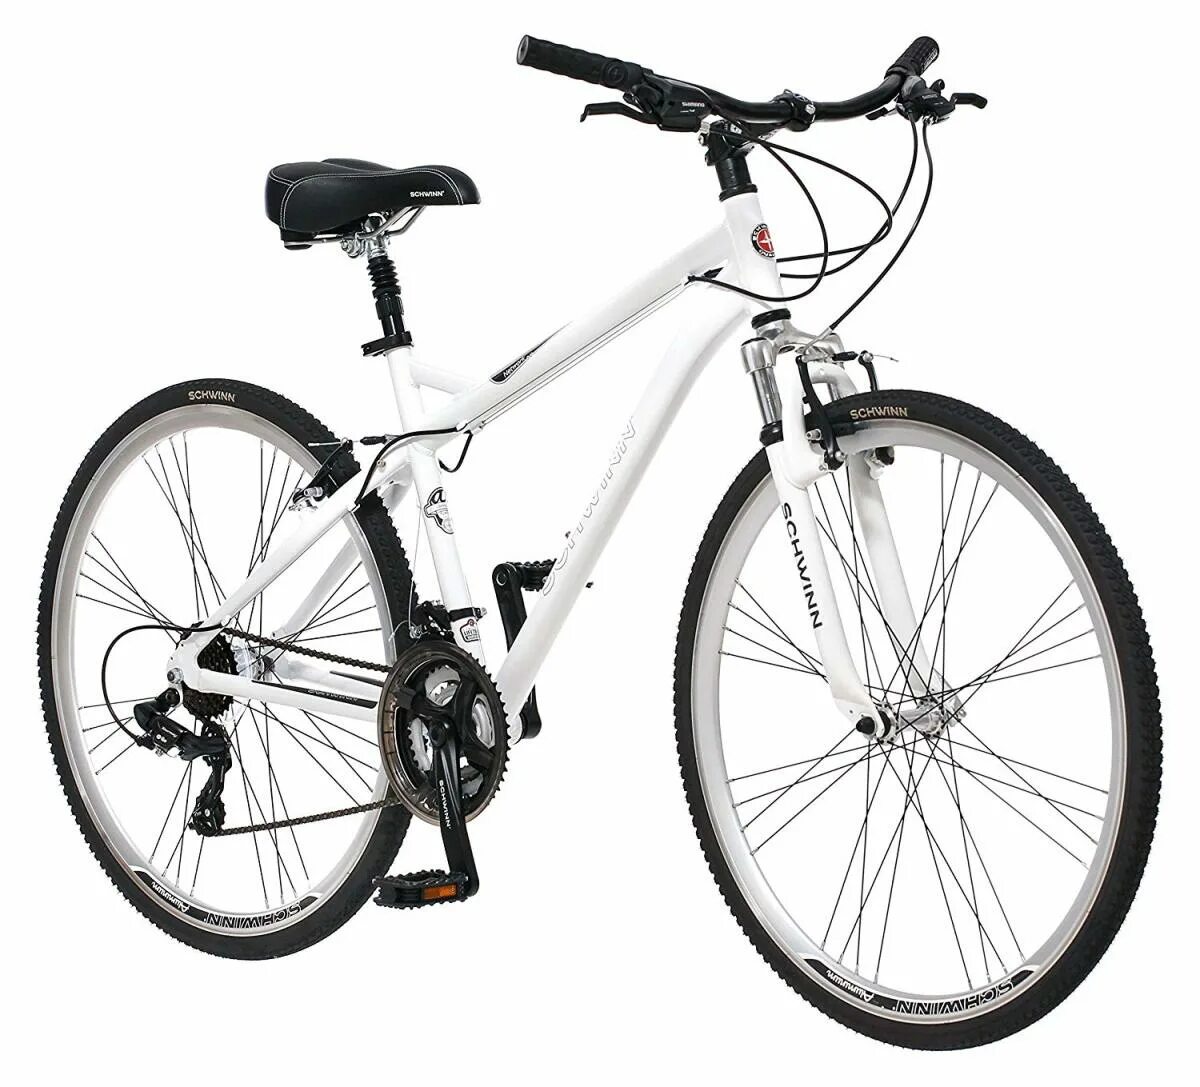 Какой фирмы купить велосипед. Велосипед Швинн Schwinn мужской. Schwinn велосипед белый. Schwinn discover Hybrid Bike. Швин кросс Кантри велосипед.